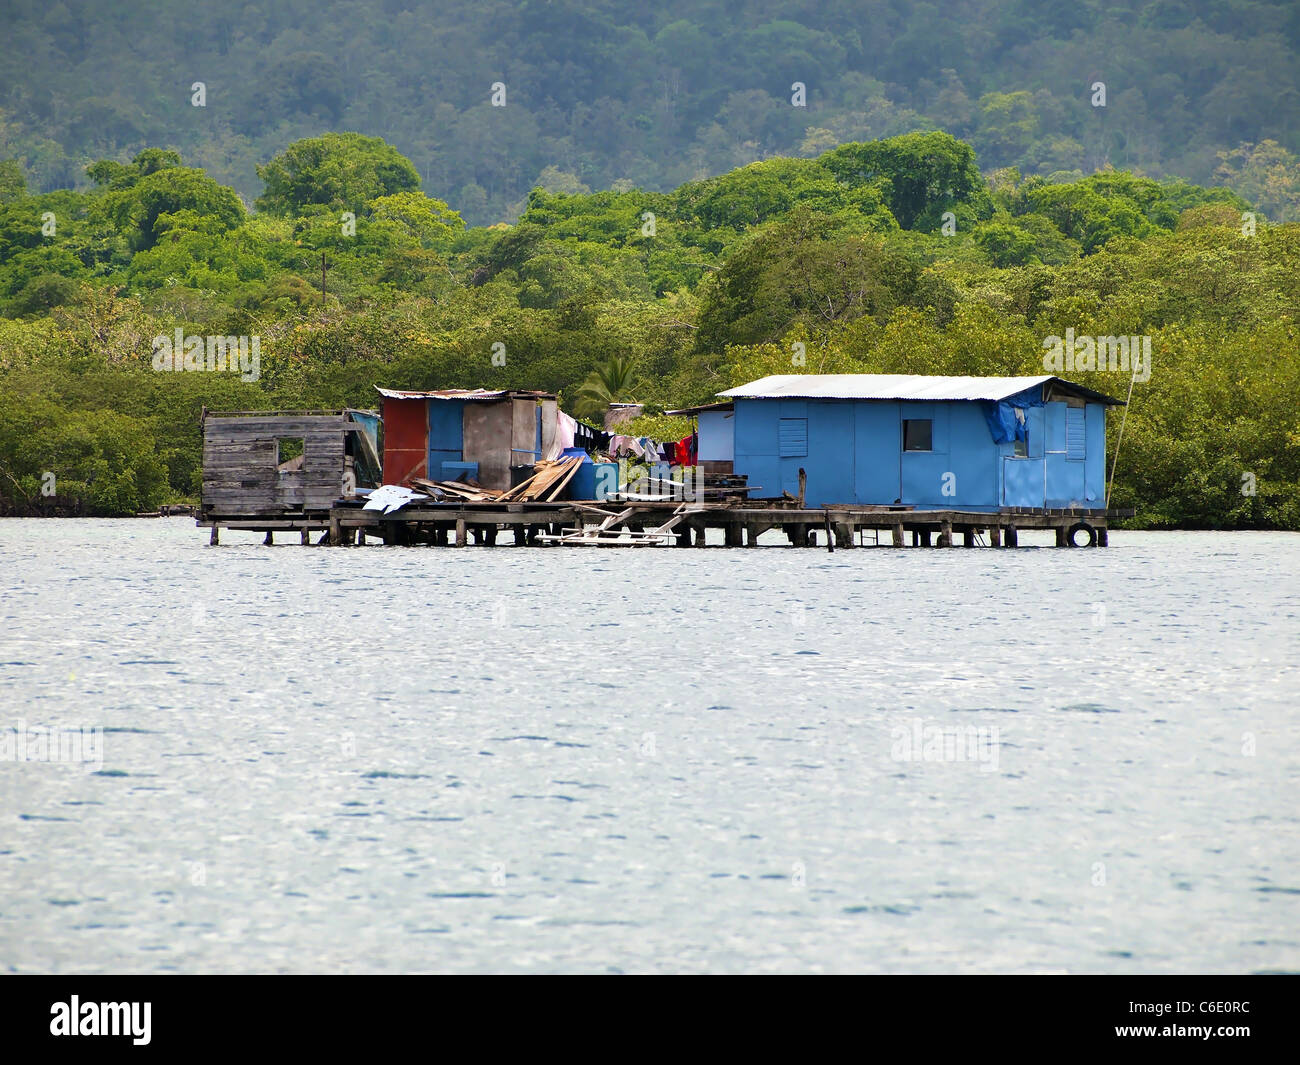 Hut on stilts in the archipelago of Bocas del Toro Stock Photo